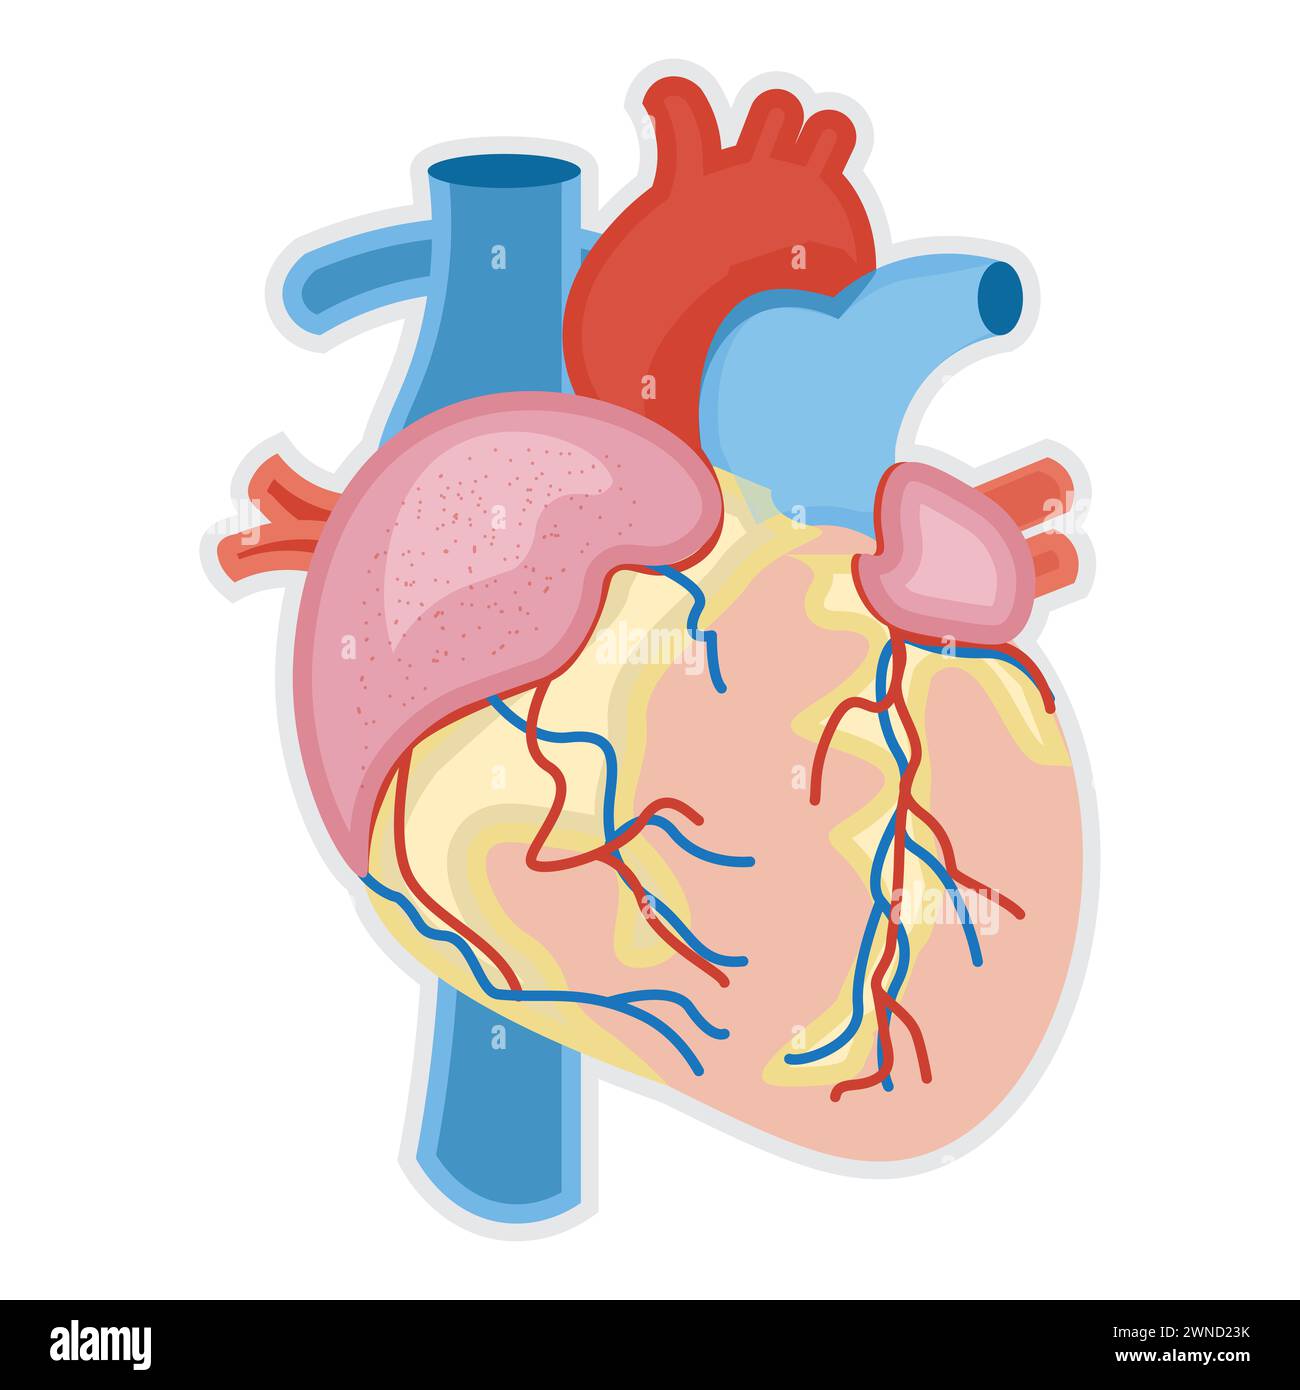 Human heart anatomy. Vector illustration in cartoon style. Isolated on white background. Stock Photo